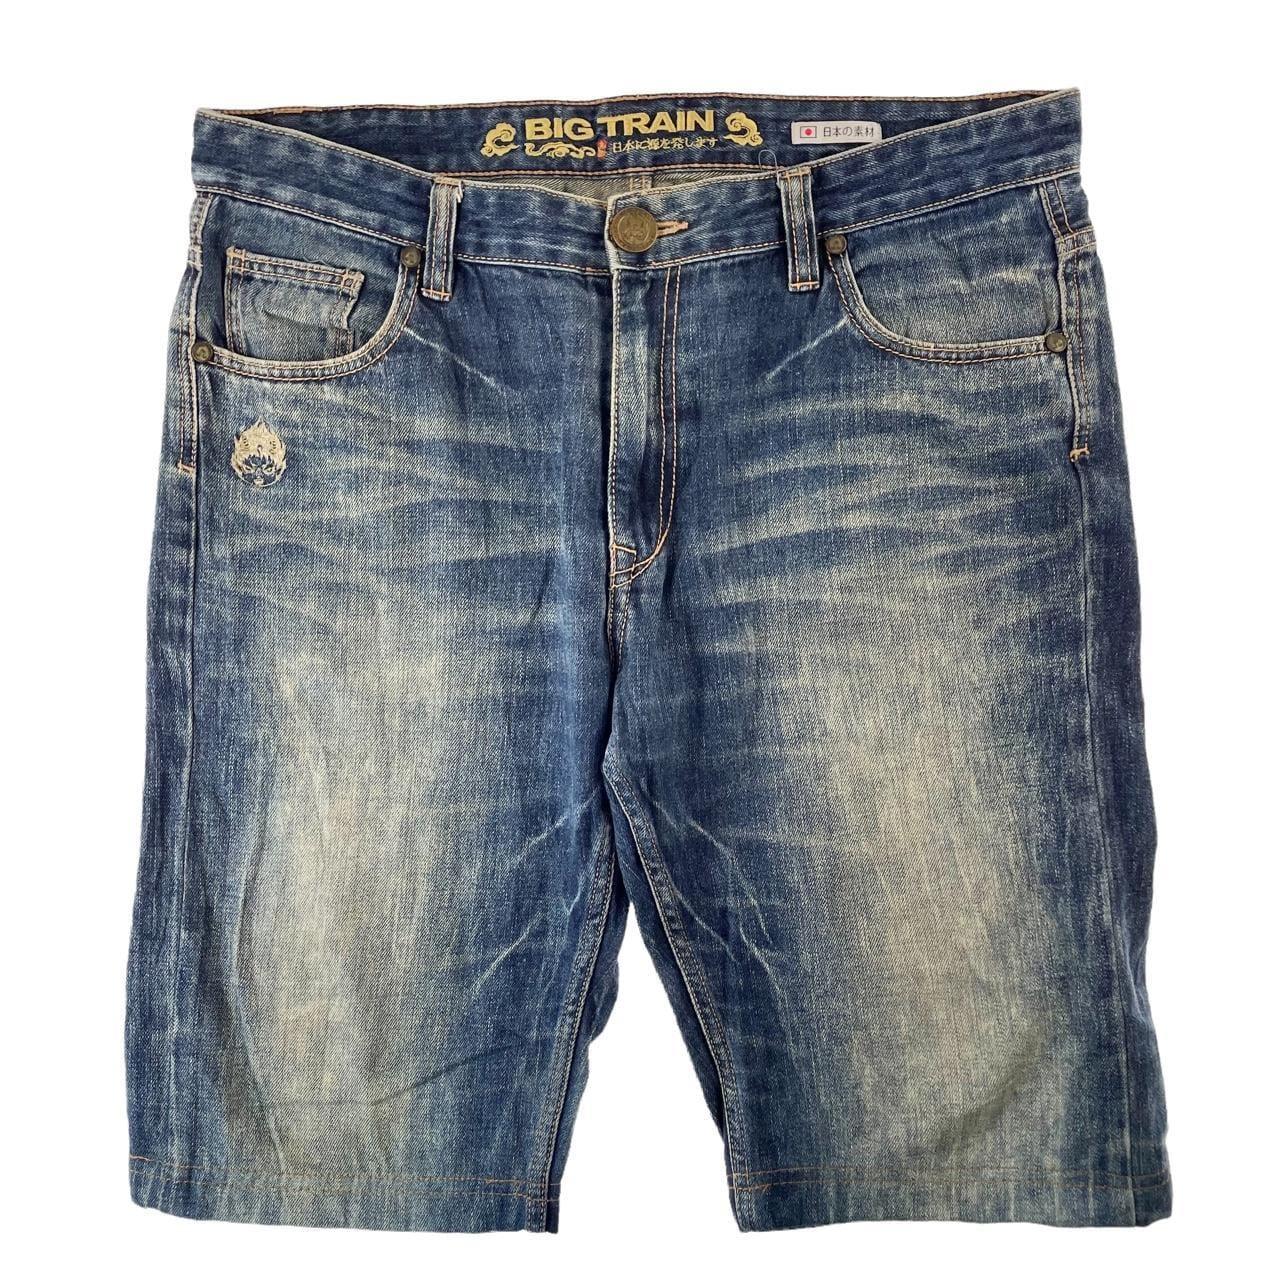 Vintage Big train Japanese denim jeans shorts W36 - Known Source